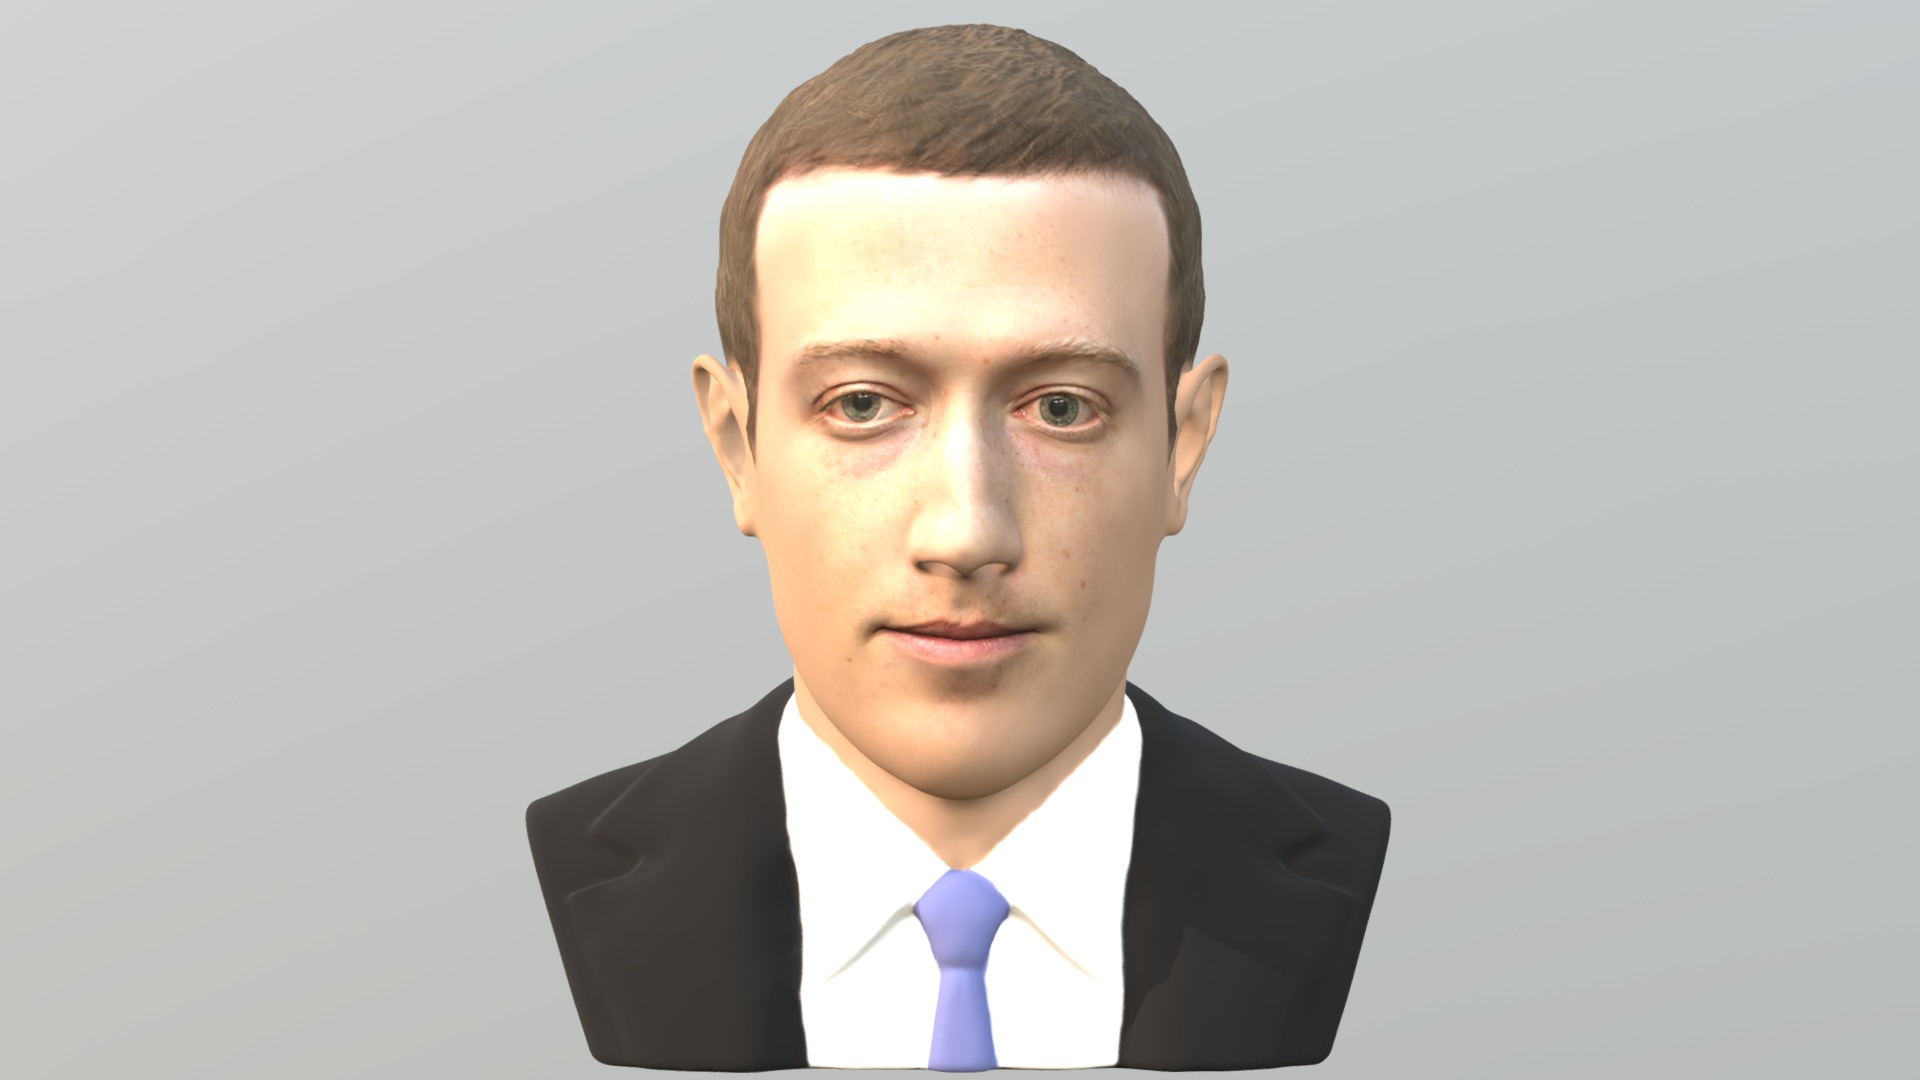 3D model Mark Zuckerberg bust full color 3D printing - This is a 3D model of the Mark Zuckerberg bust full color 3D printing. The 3D model is about a man in a suit.